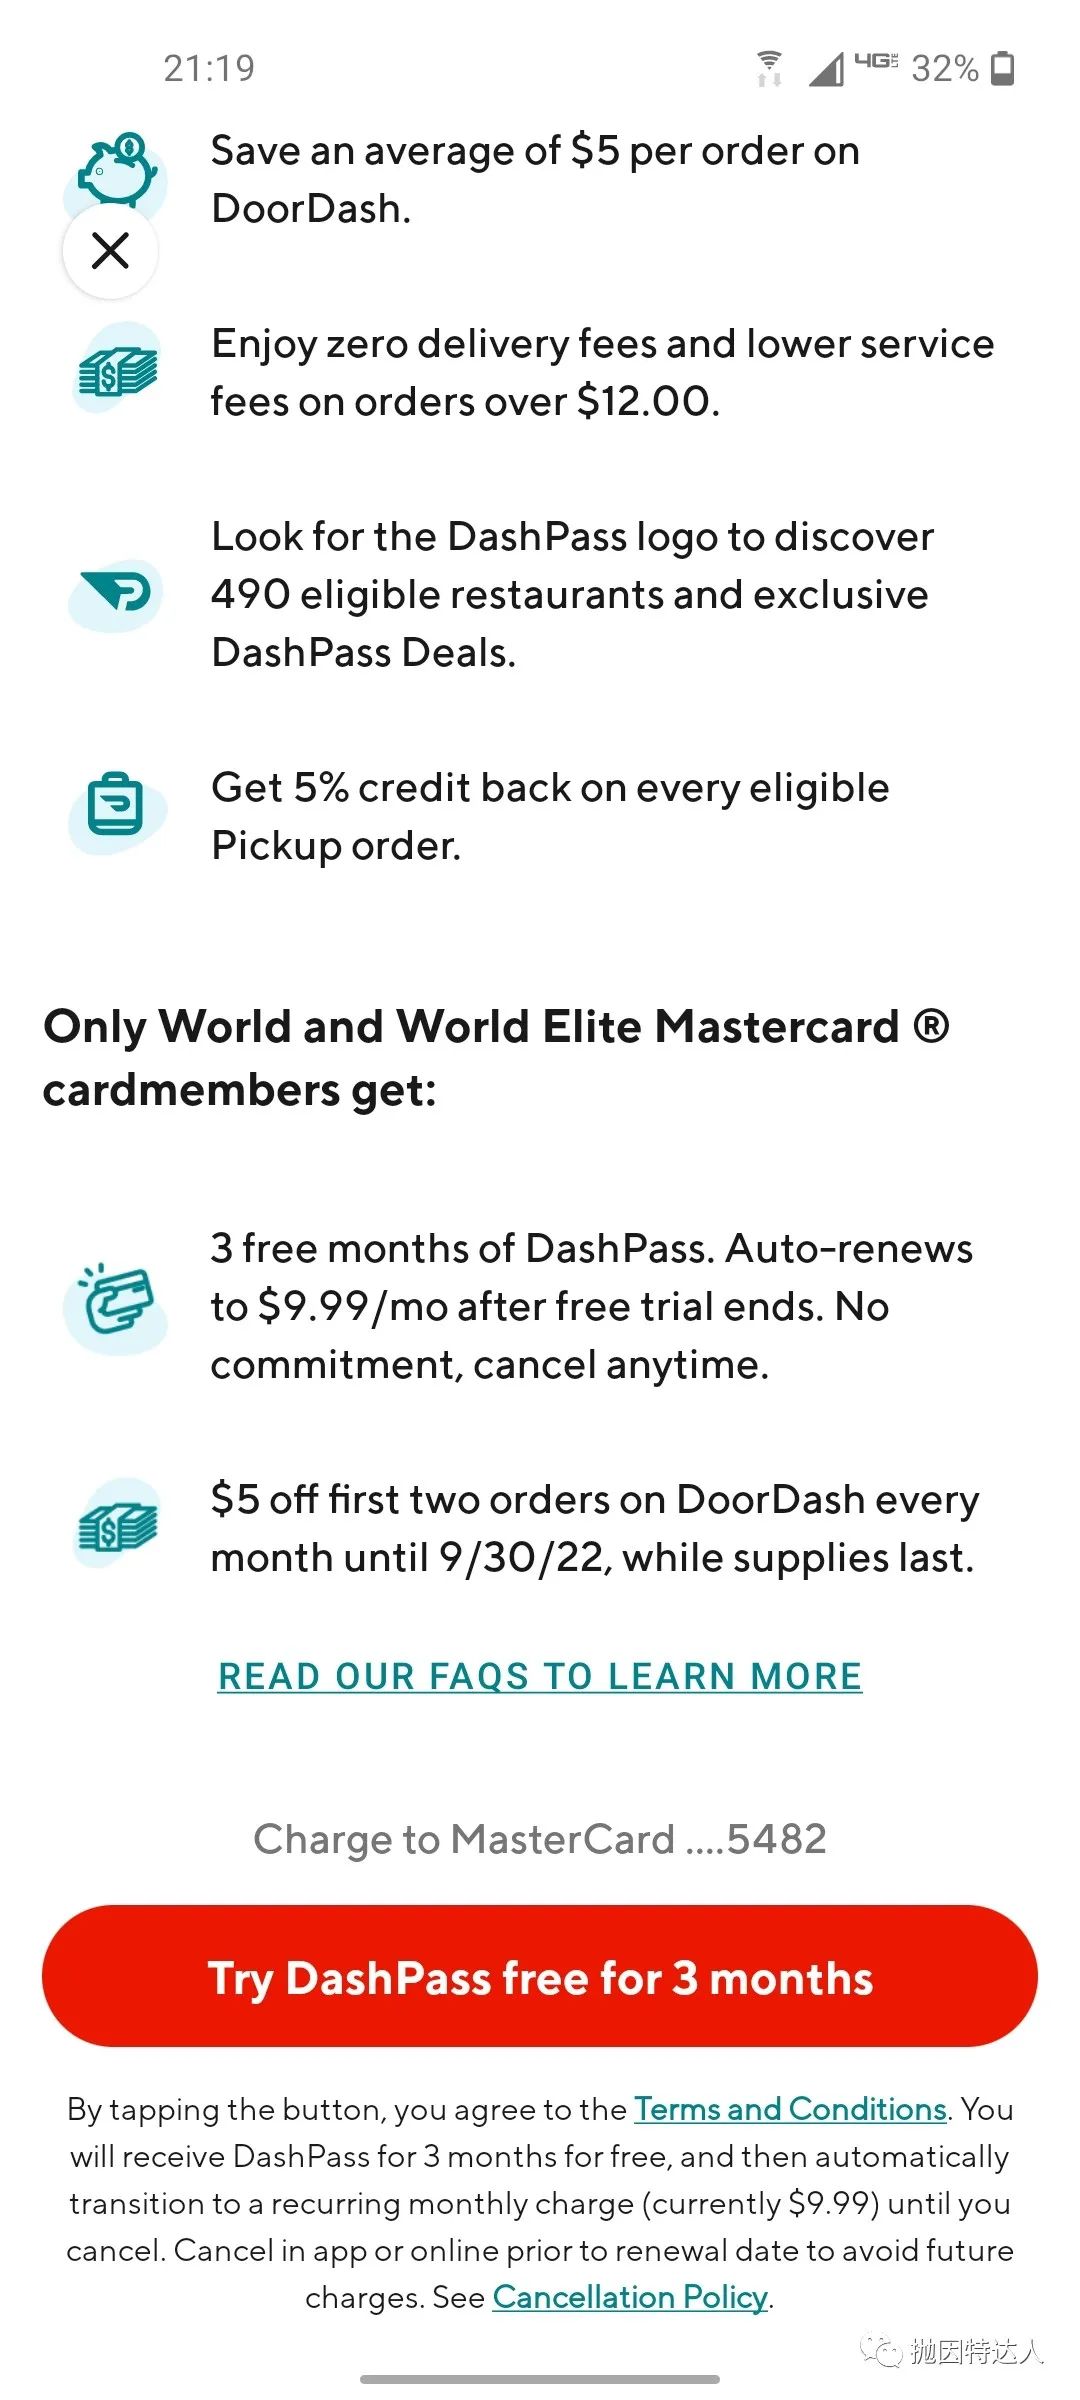 《Mastercard联合DoorDash给大家送钱，每个月都有免费奶茶领取哦！》